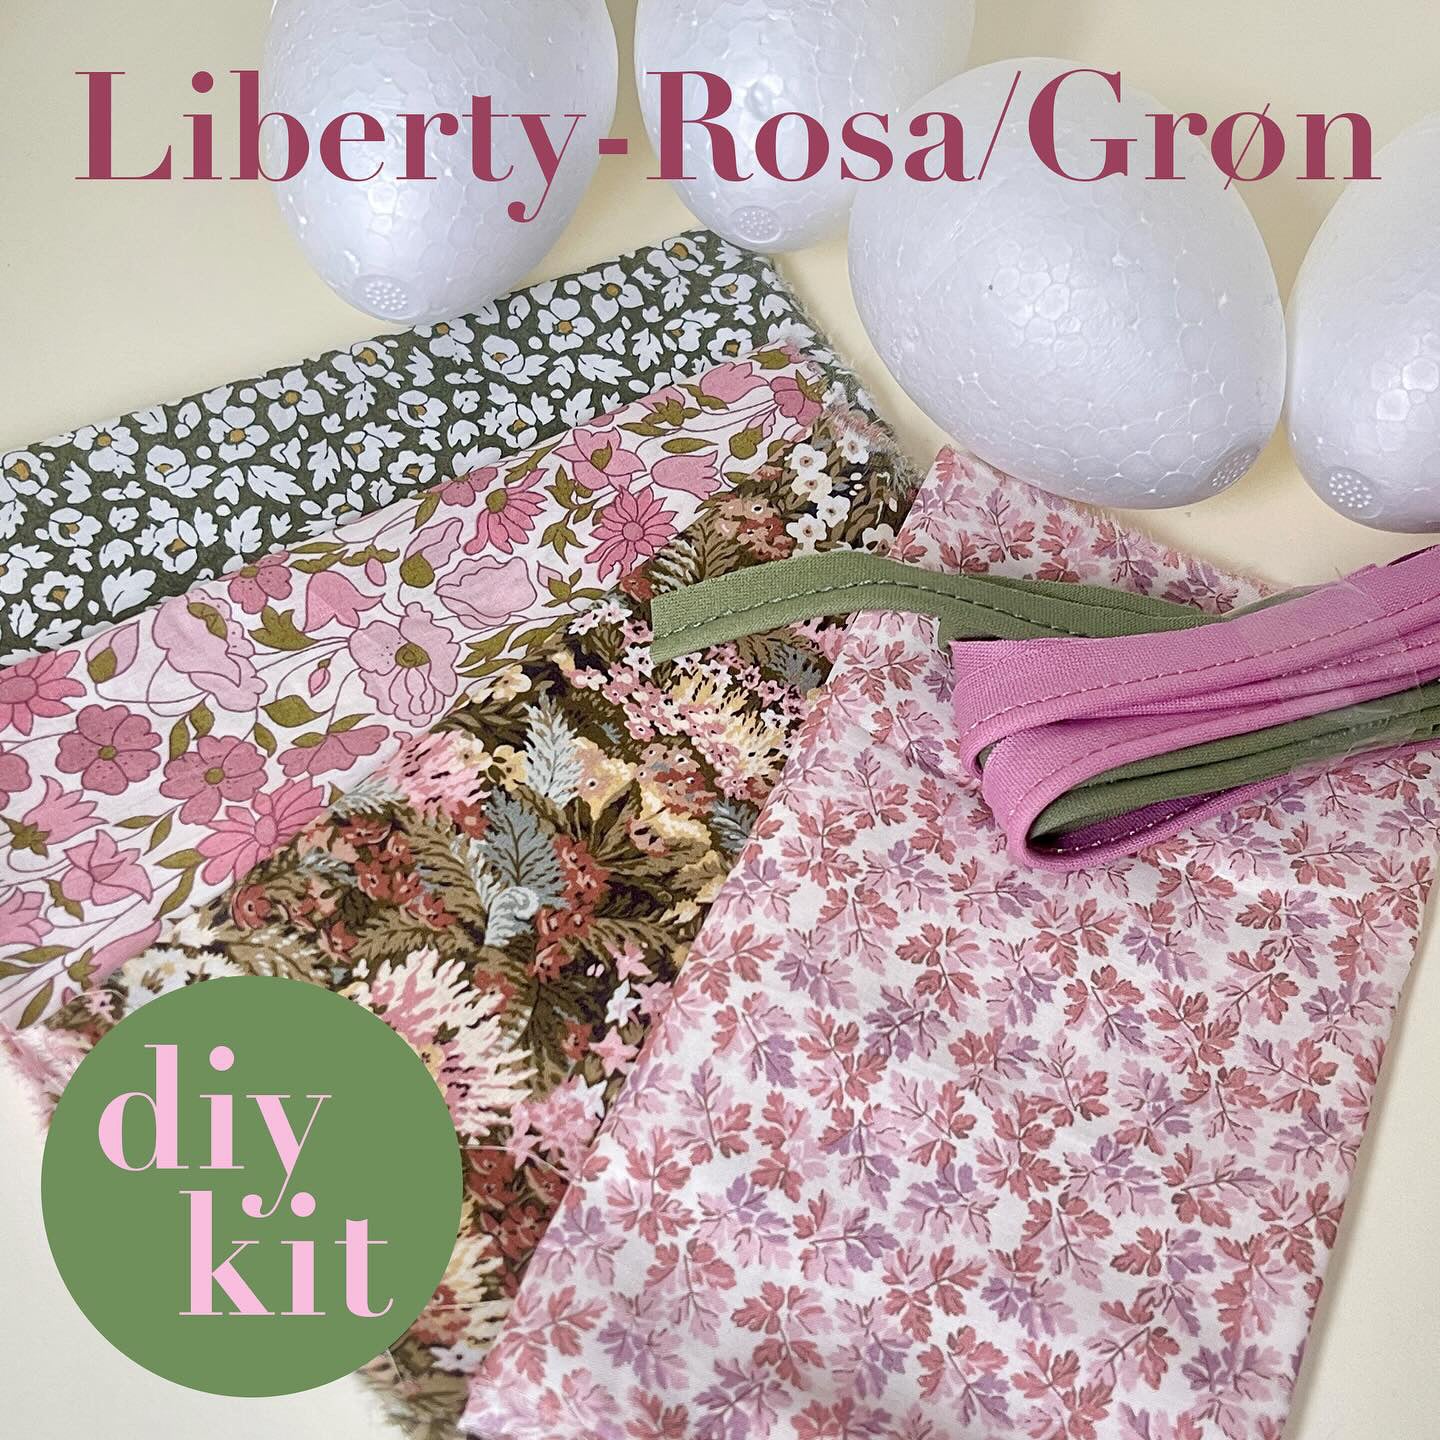 Diy-kit: 4 stk. Påskeæg / Liberty Rosa-Grøn